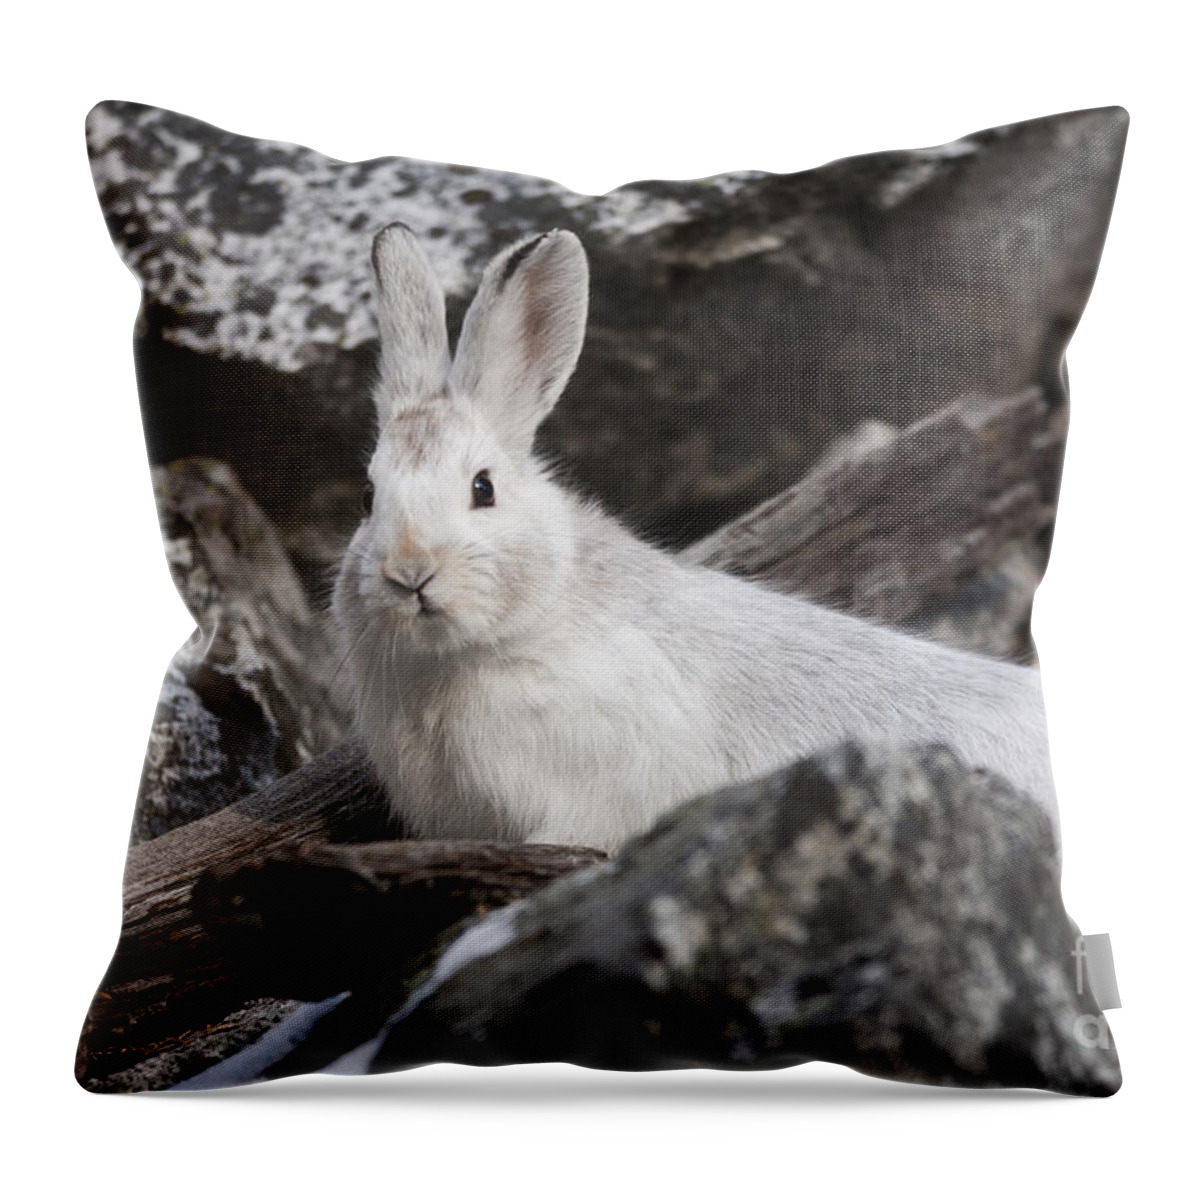 Rabbit Throw Pillow featuring the photograph Snowshoe by Douglas Kikendall